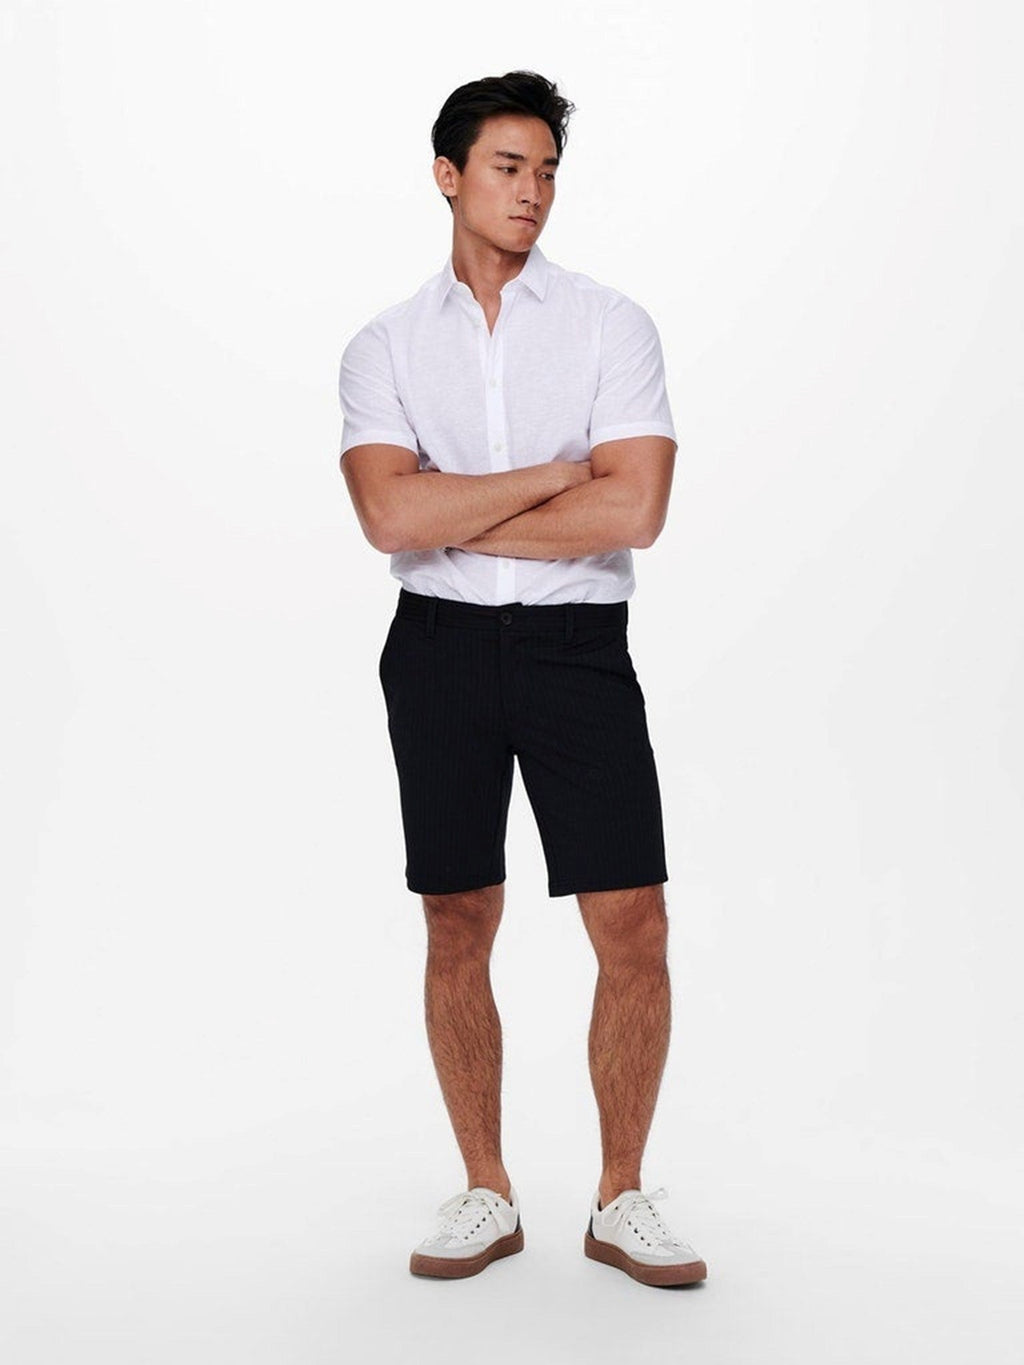 Mark shorts streep - zwart